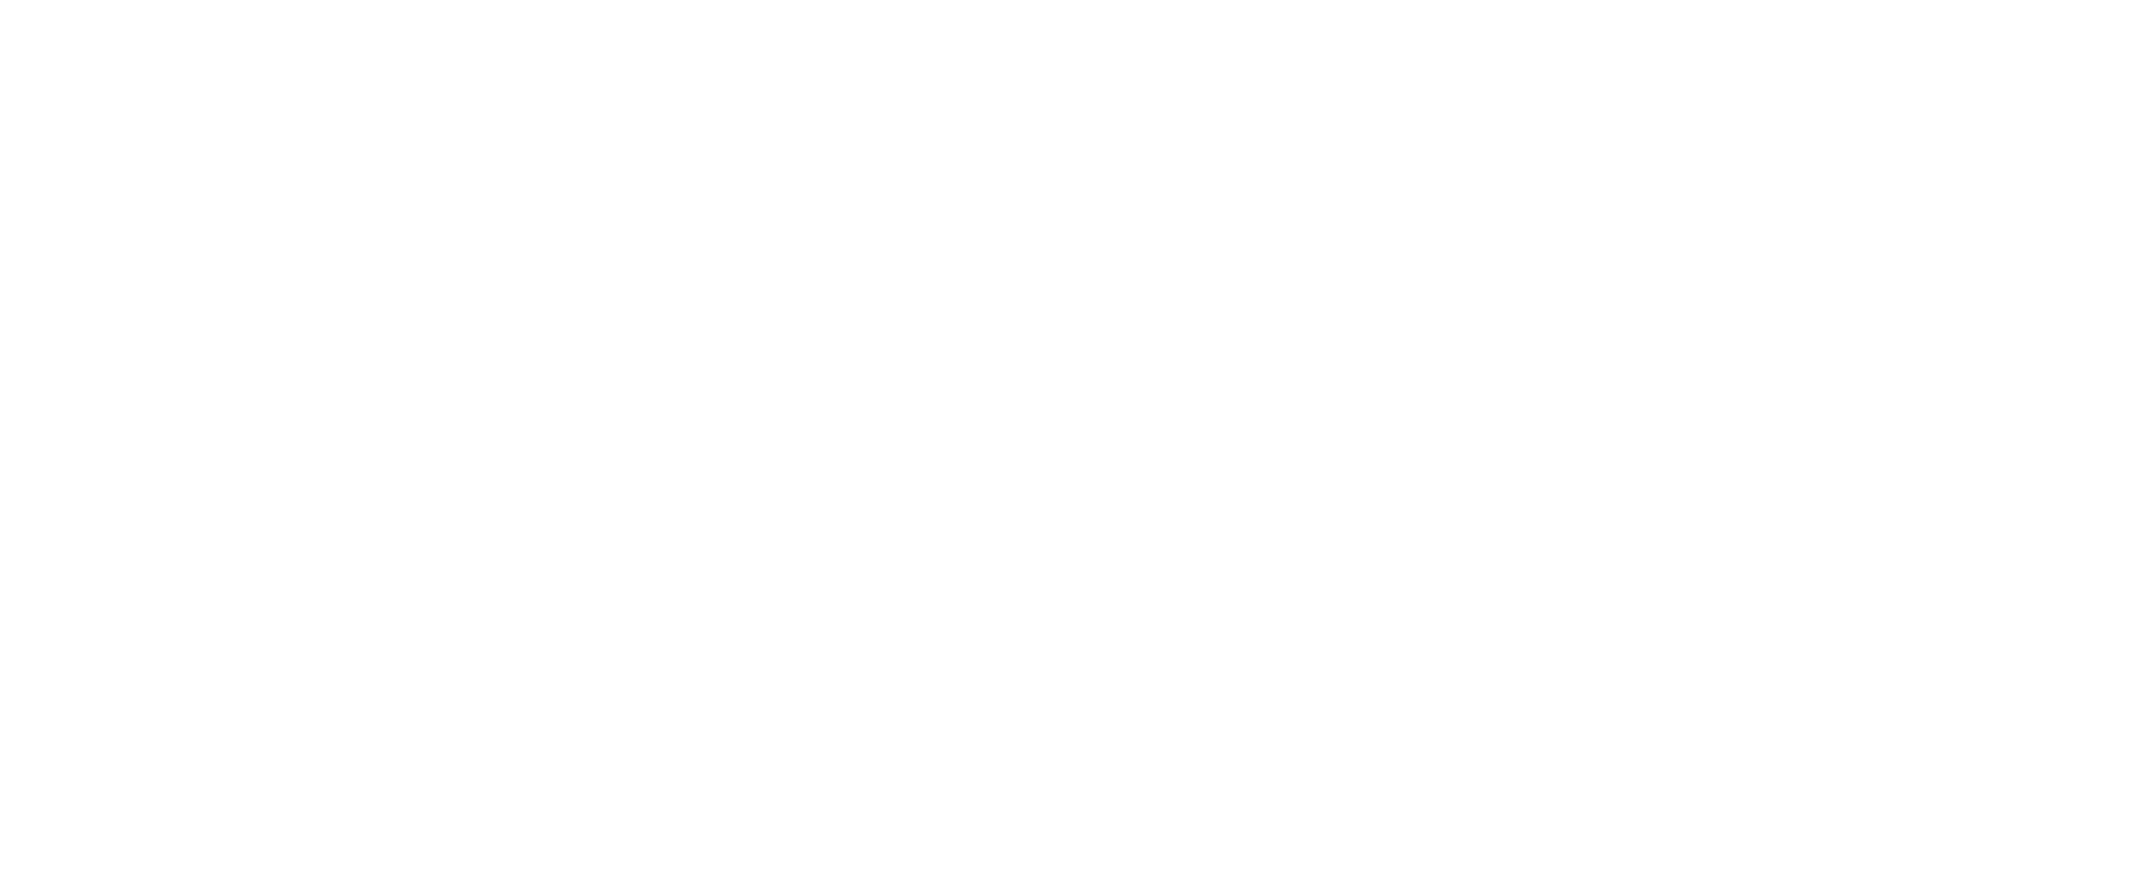 Houston Spine and Rehab Logo White